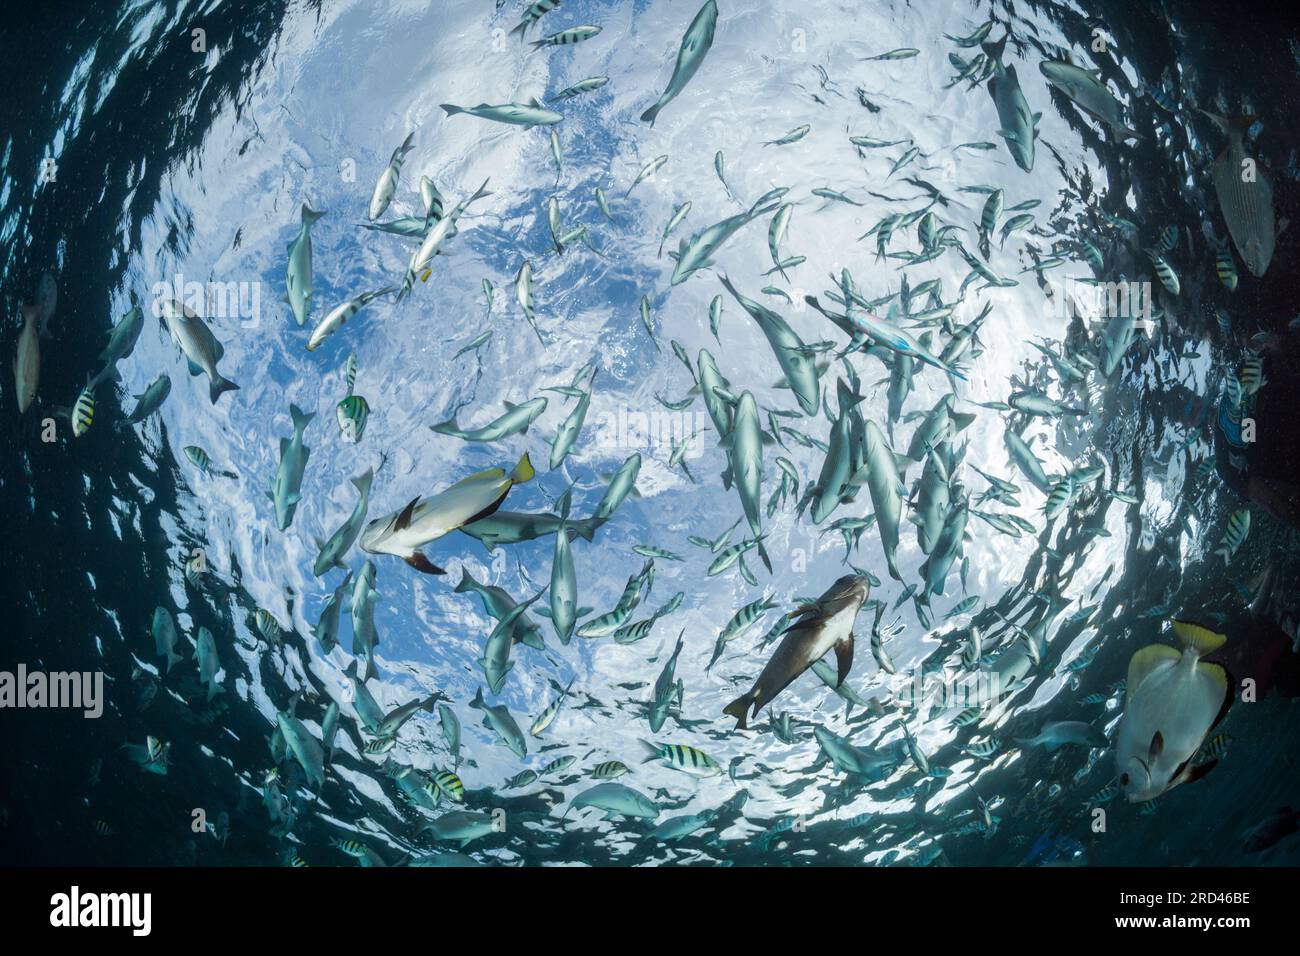 Schooling Fish at Watersurface, Raja Ampat, West Papua, Indonesia Stock Photo